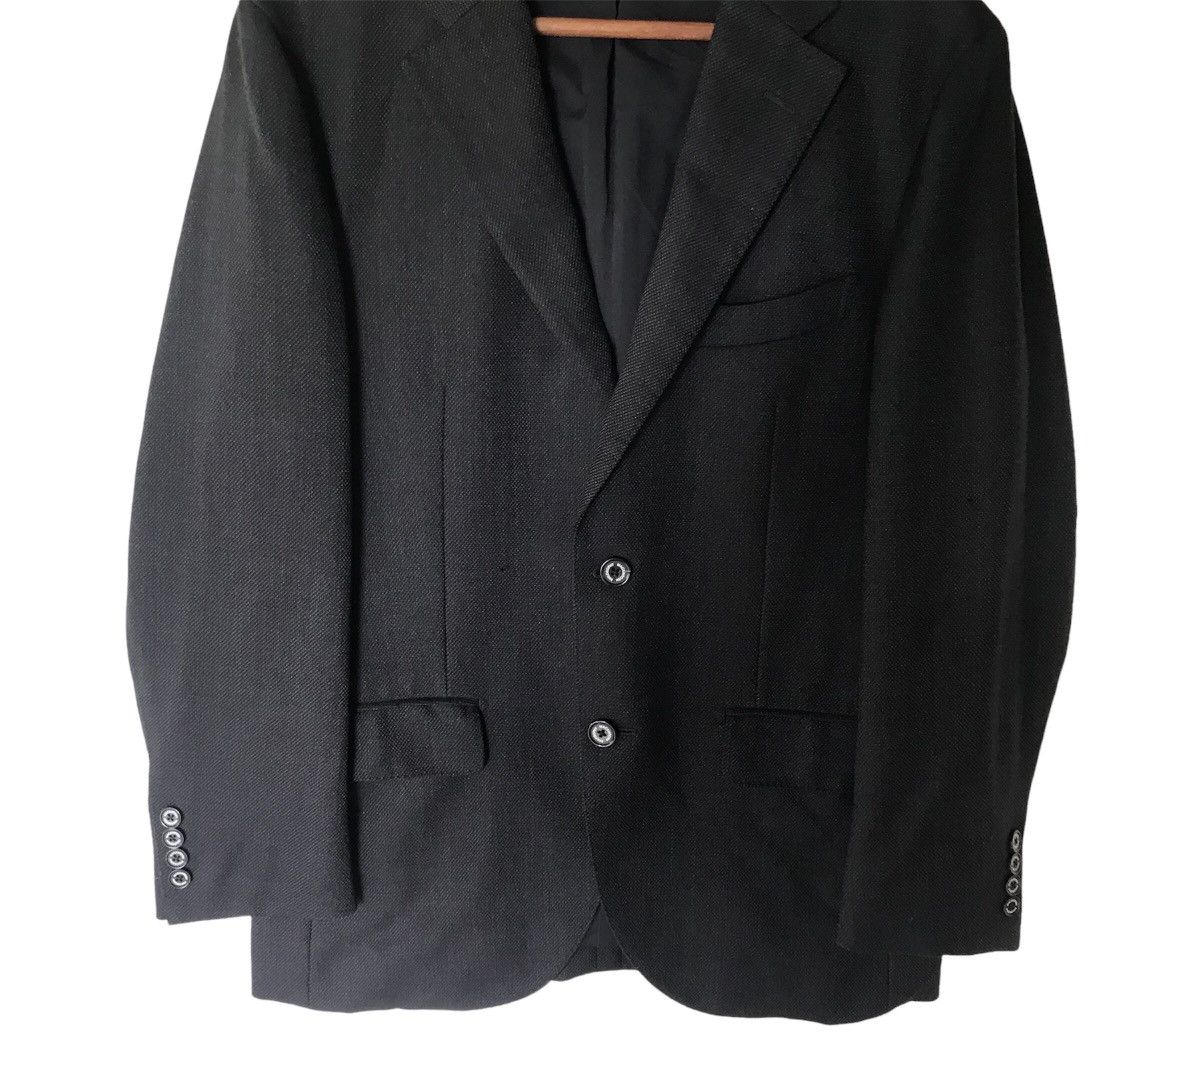 Mackintosh Philosophy Suit/Blazer - 7